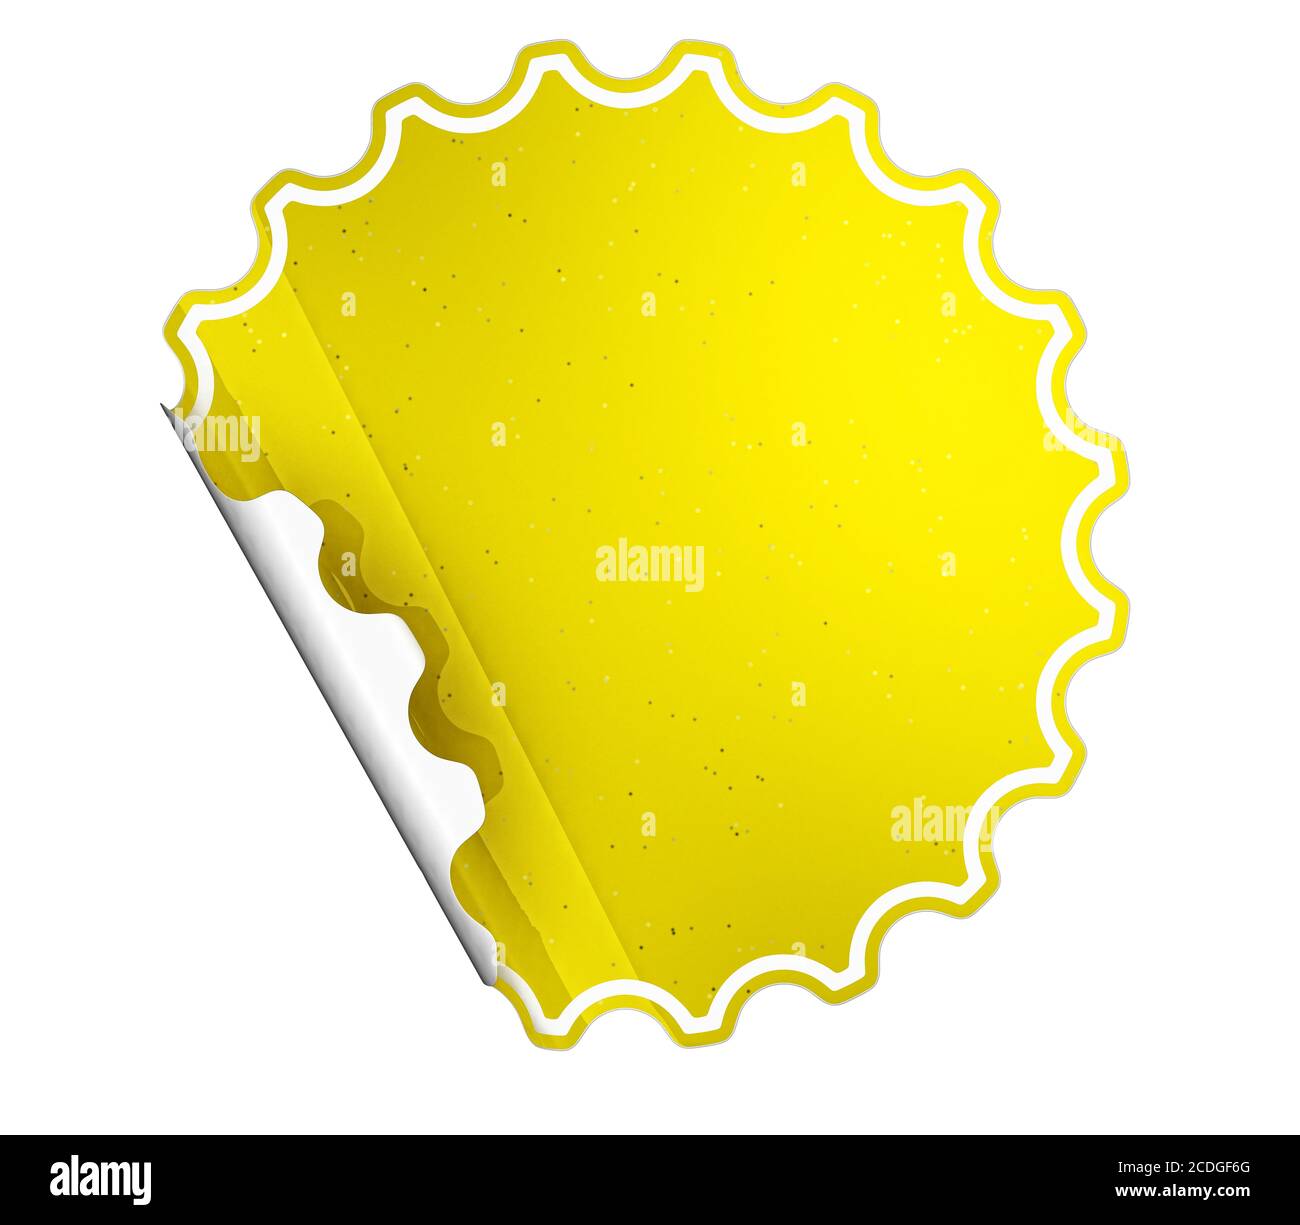 Yellow round hamous sticker or label Stock Photo